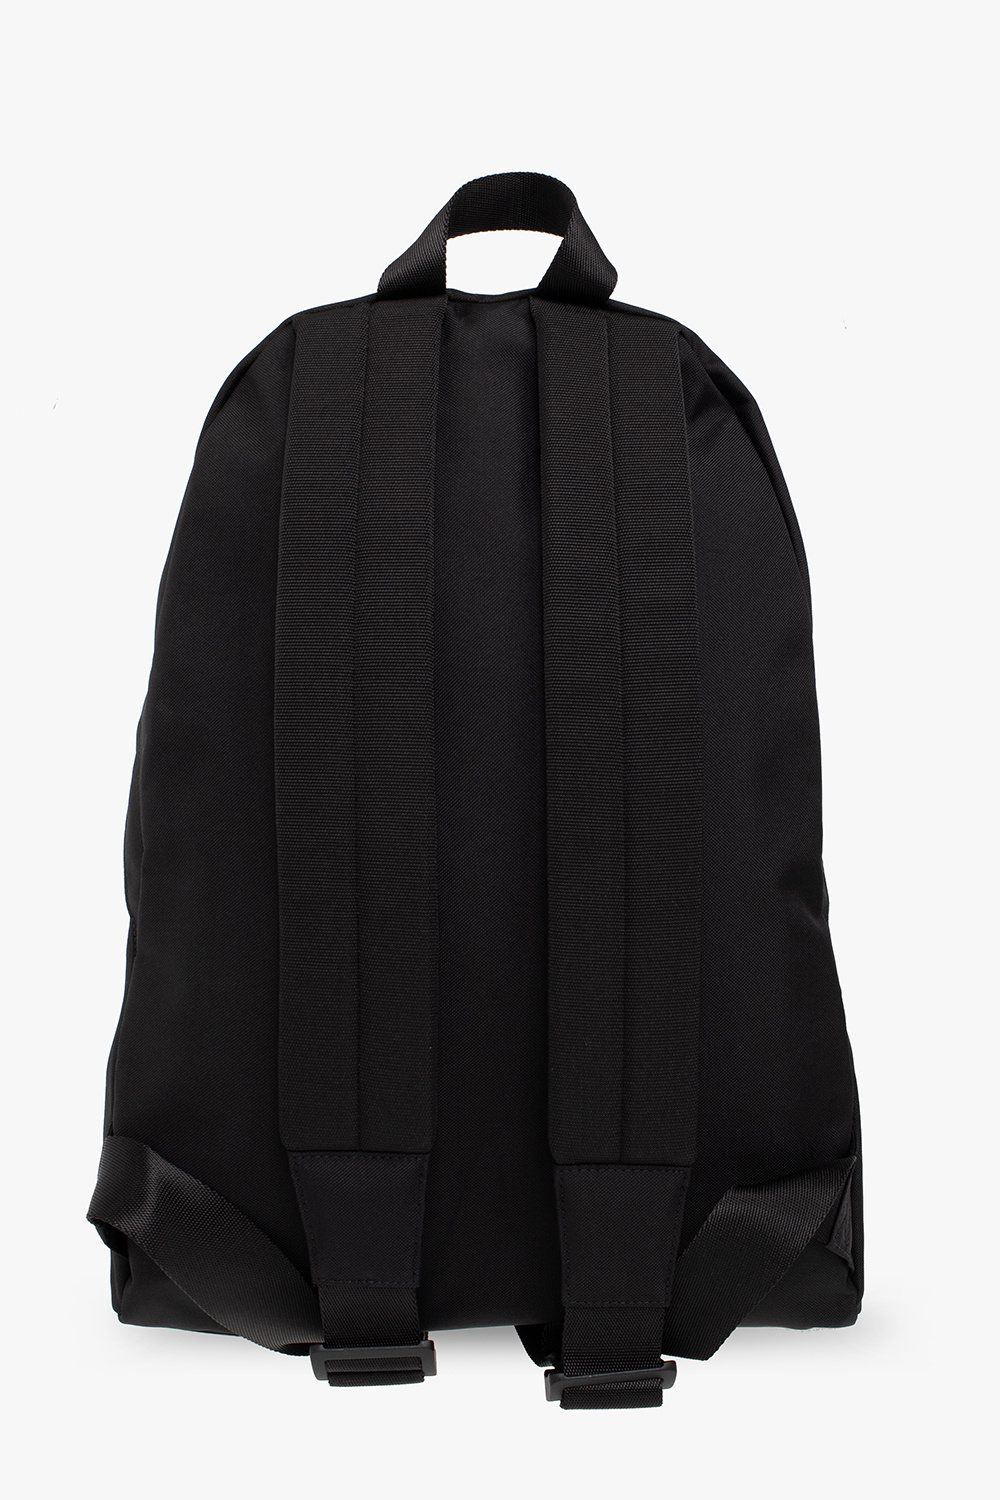 Balenciaga FURLA backpack with logo